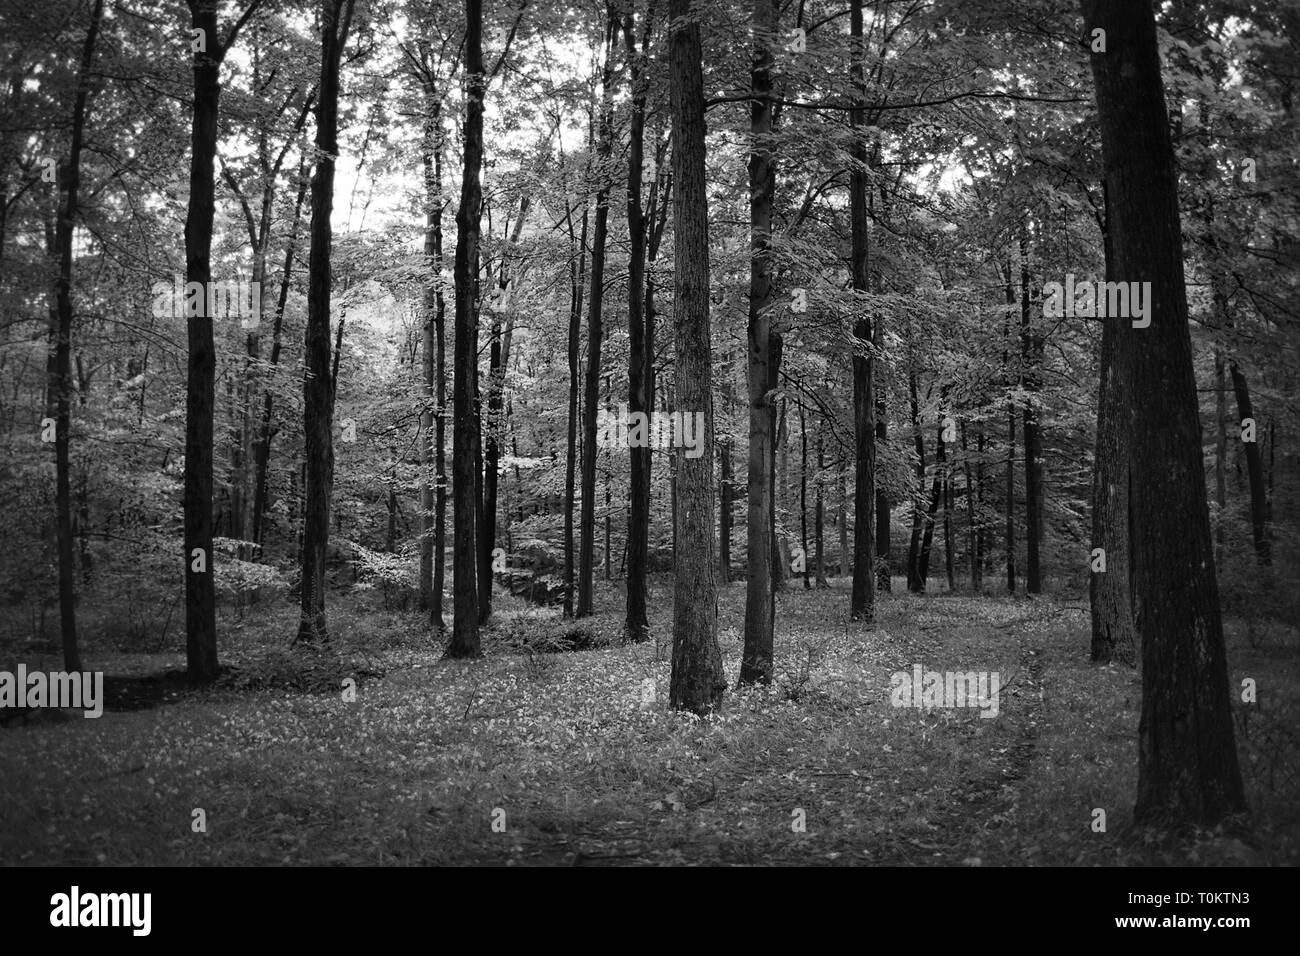 Remote Wald voller Bäume. Stockfoto